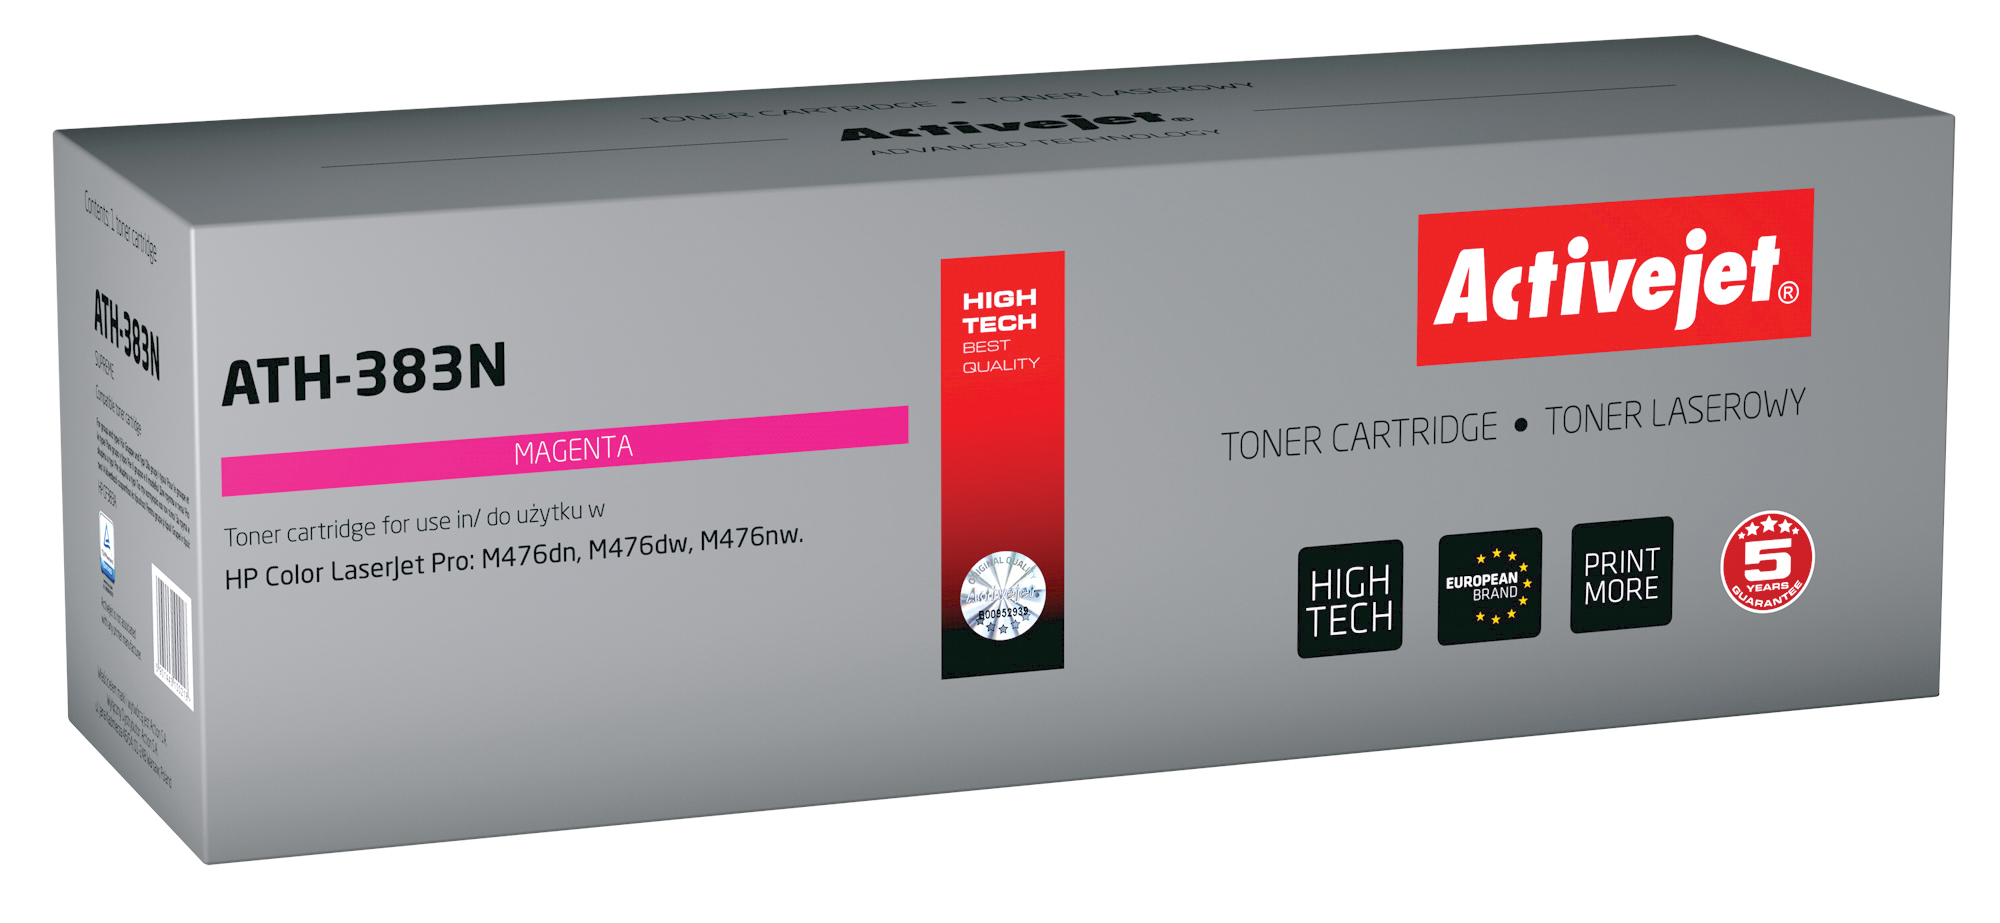 Toner Activejet ATH-383N do drukarki HP, Zamiennik HP 312A CF383A;  Supreme;  2700 stron;  purpurowy.